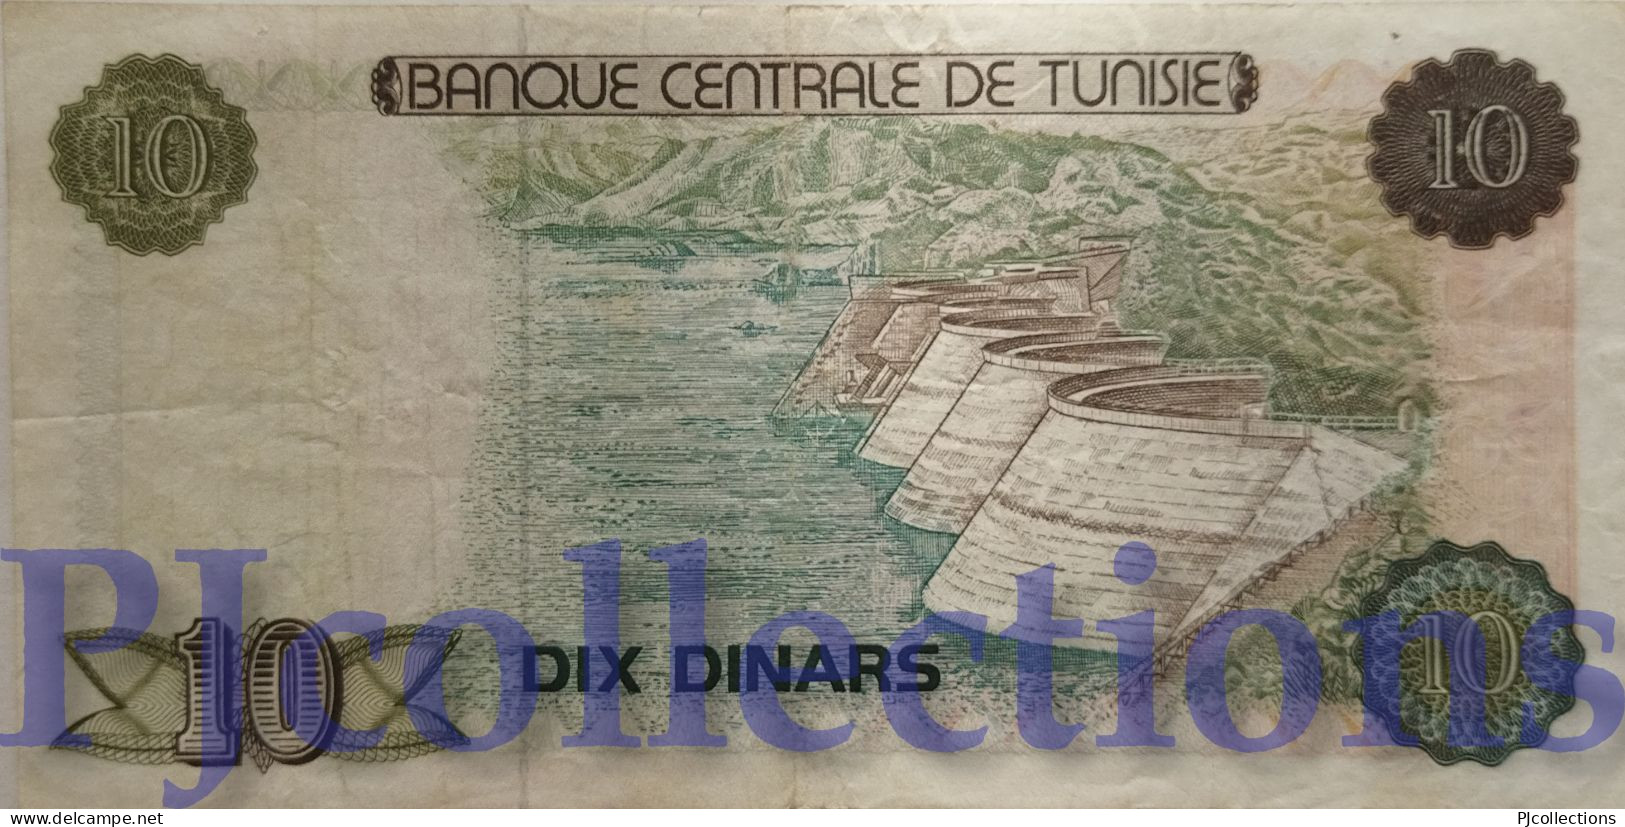 TUNISIA 10 DINARS 1980 PICK 76 XF - Tunisia